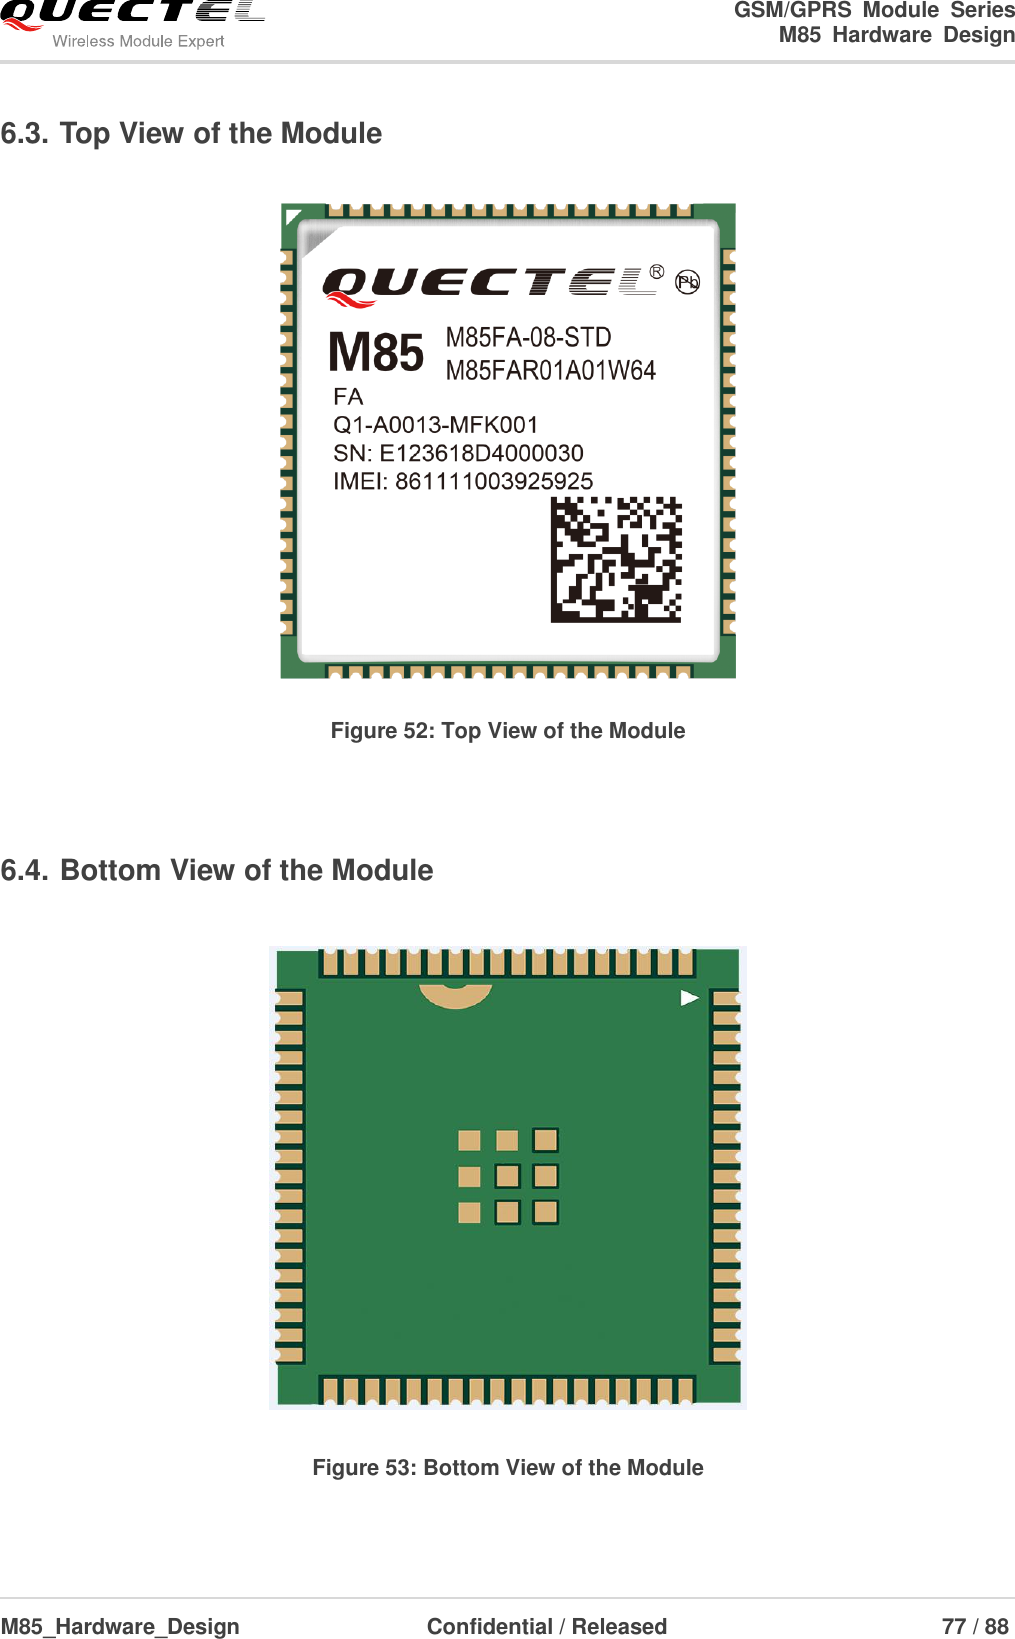                                                                                                                                               GSM/GPRS  Module  Series                                                                 M85  Hardware  Design  M85_Hardware_Design                  Confidential / Released                             77 / 88      6.3. Top View of the Module   Figure 52: Top View of the Module  6.4. Bottom View of the Module   Figure 53: Bottom View of the Module 